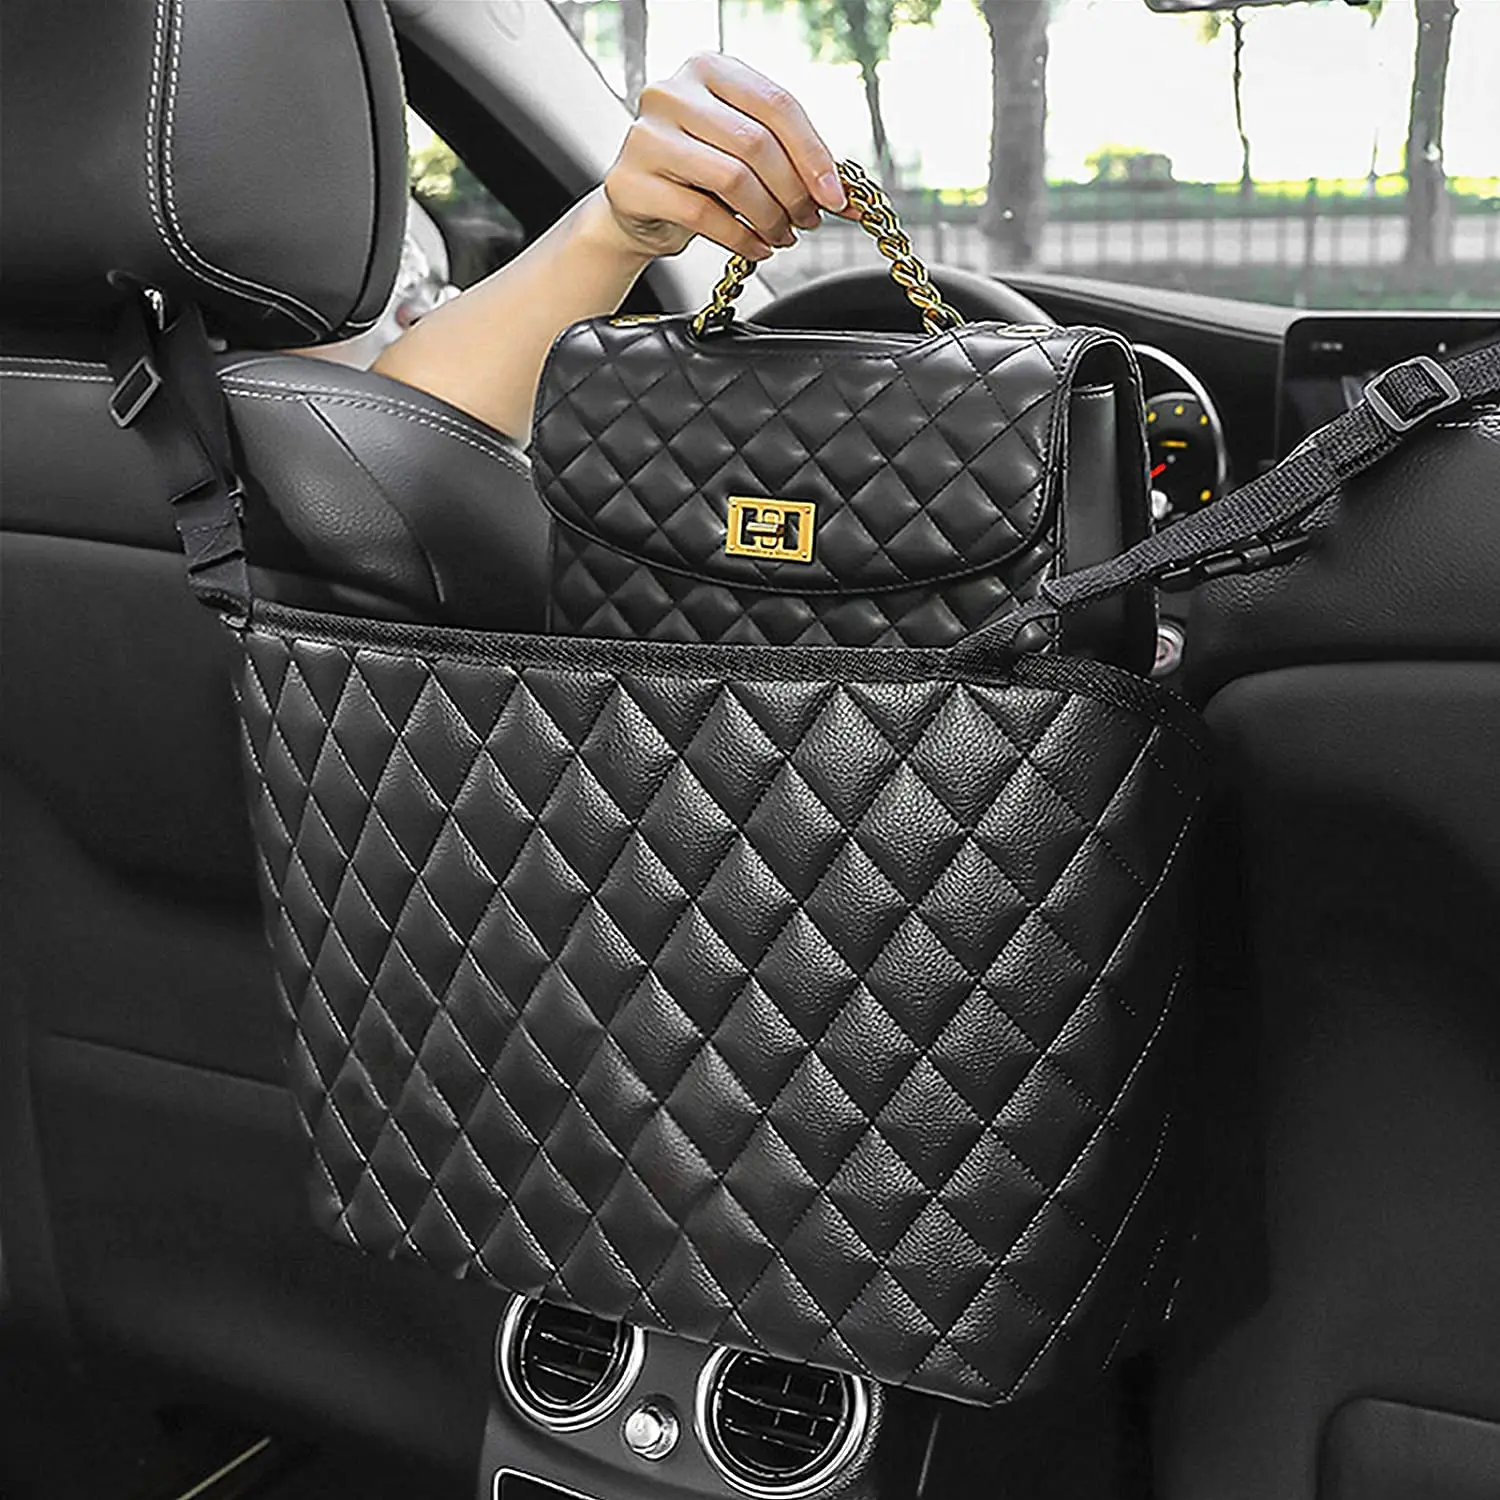 PU Leather Large Bag Purse Holder for Car Front Seat Car Net Pocket Handbag Holder Storage Organizer Car Purse Holder Between Seats with 2 Car Hooks Car Seat Barrier for Pets and Little Kids   